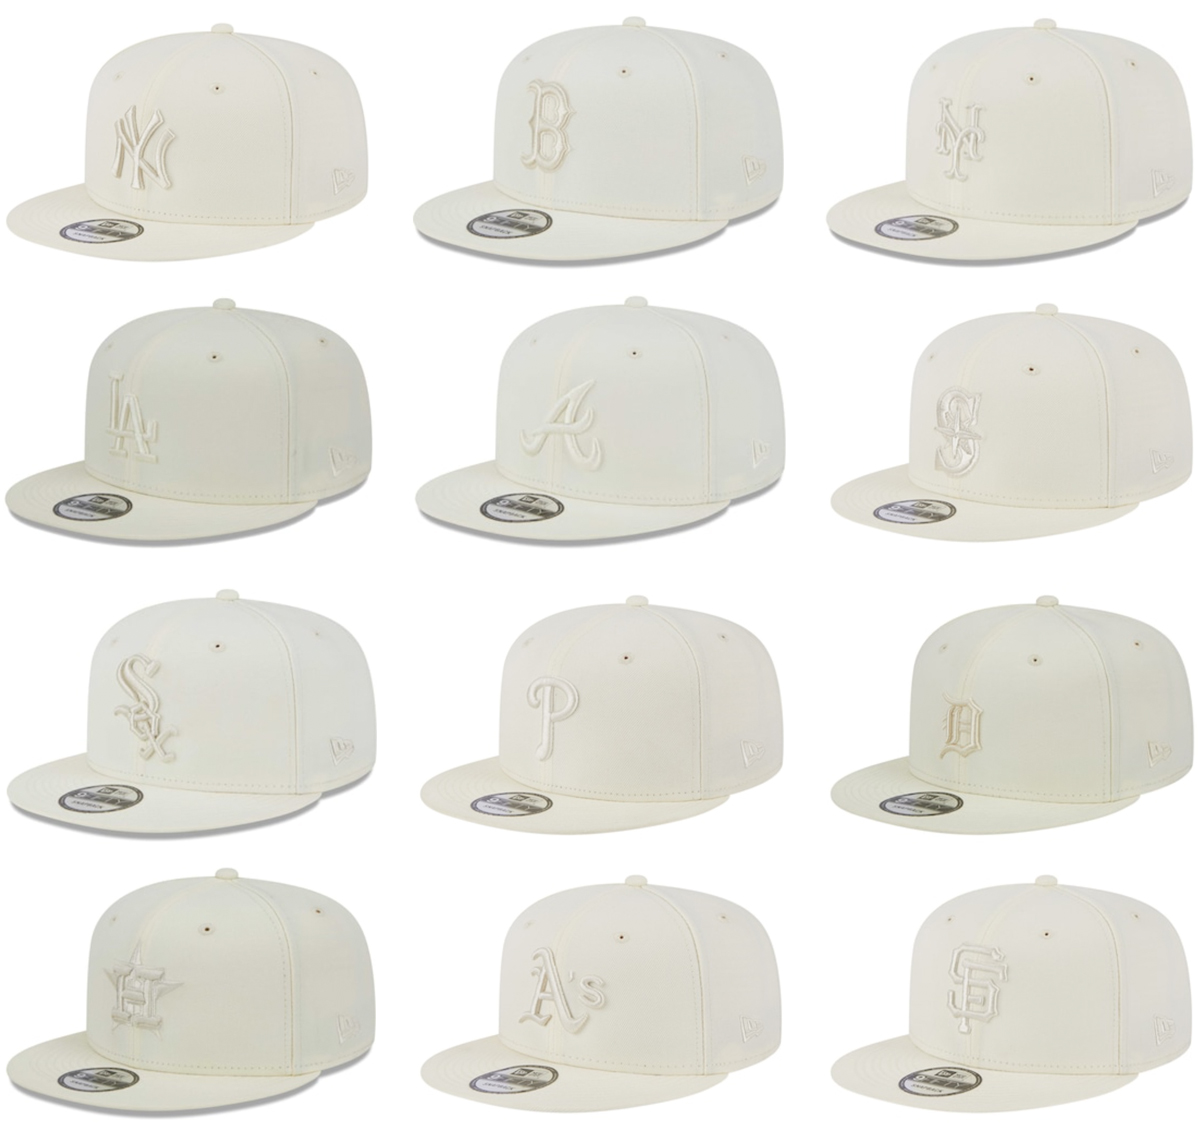 New-Era-MLB-Cream-Snapback-Hats